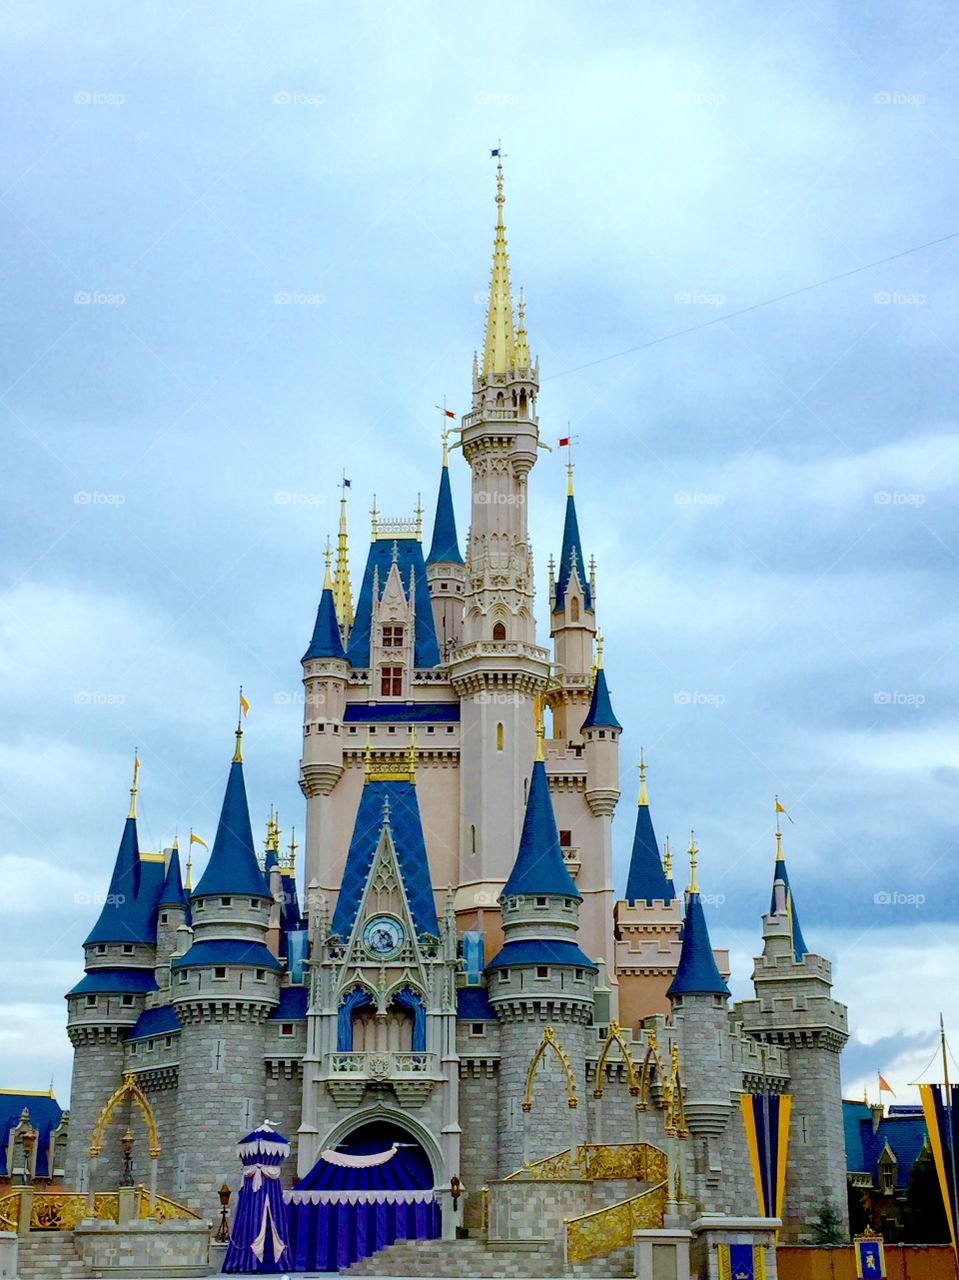 Disney World Castle. Cinderella's Castle 